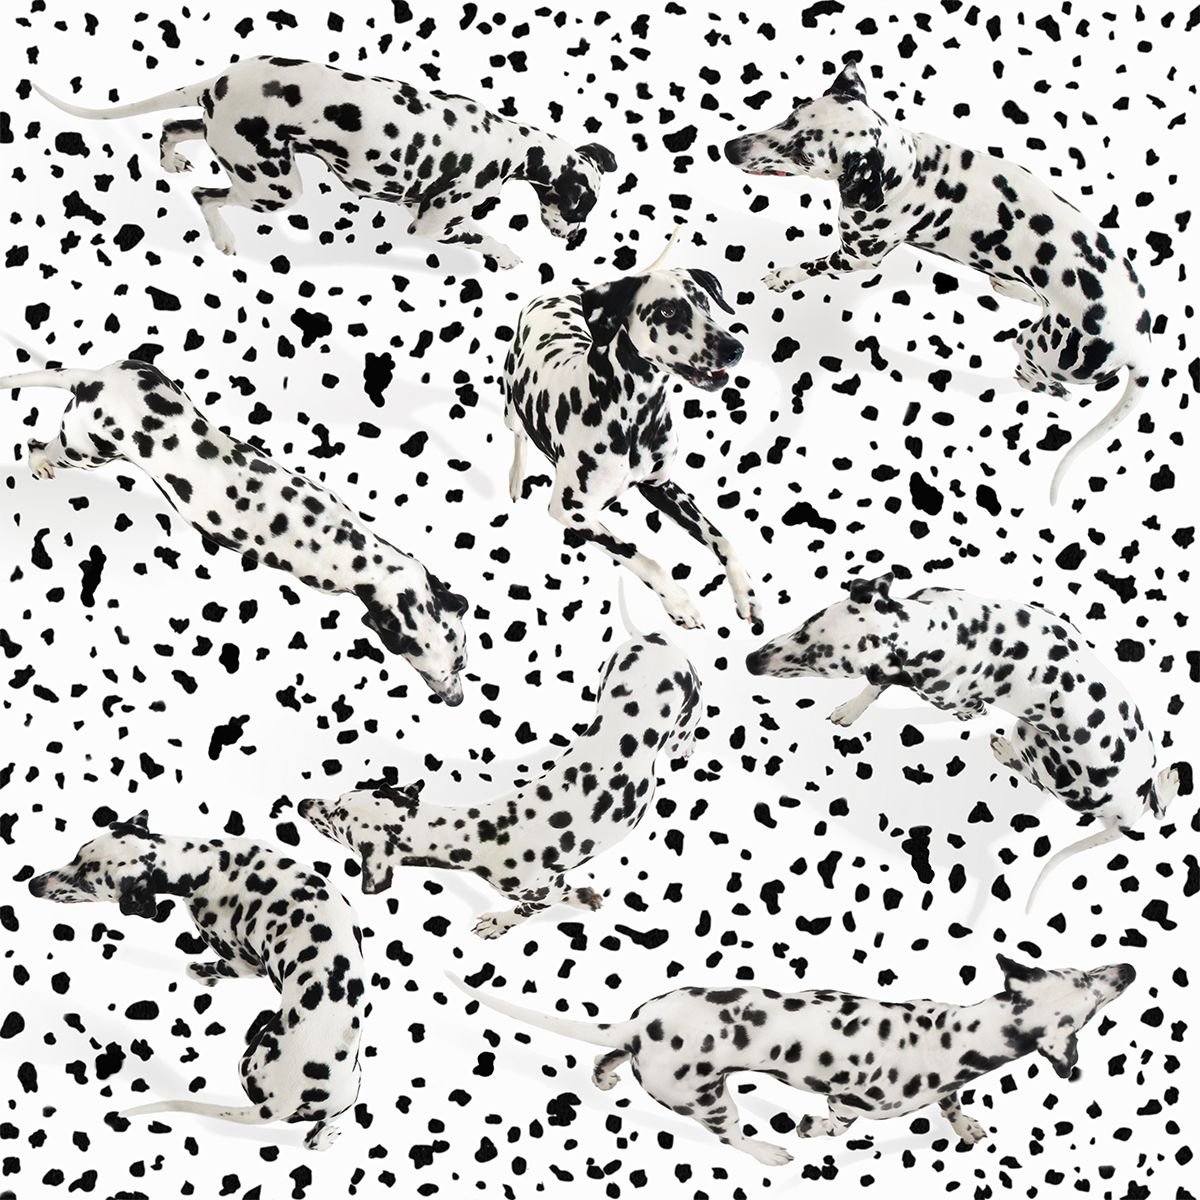 Joy of Dots by Gandee Vasan